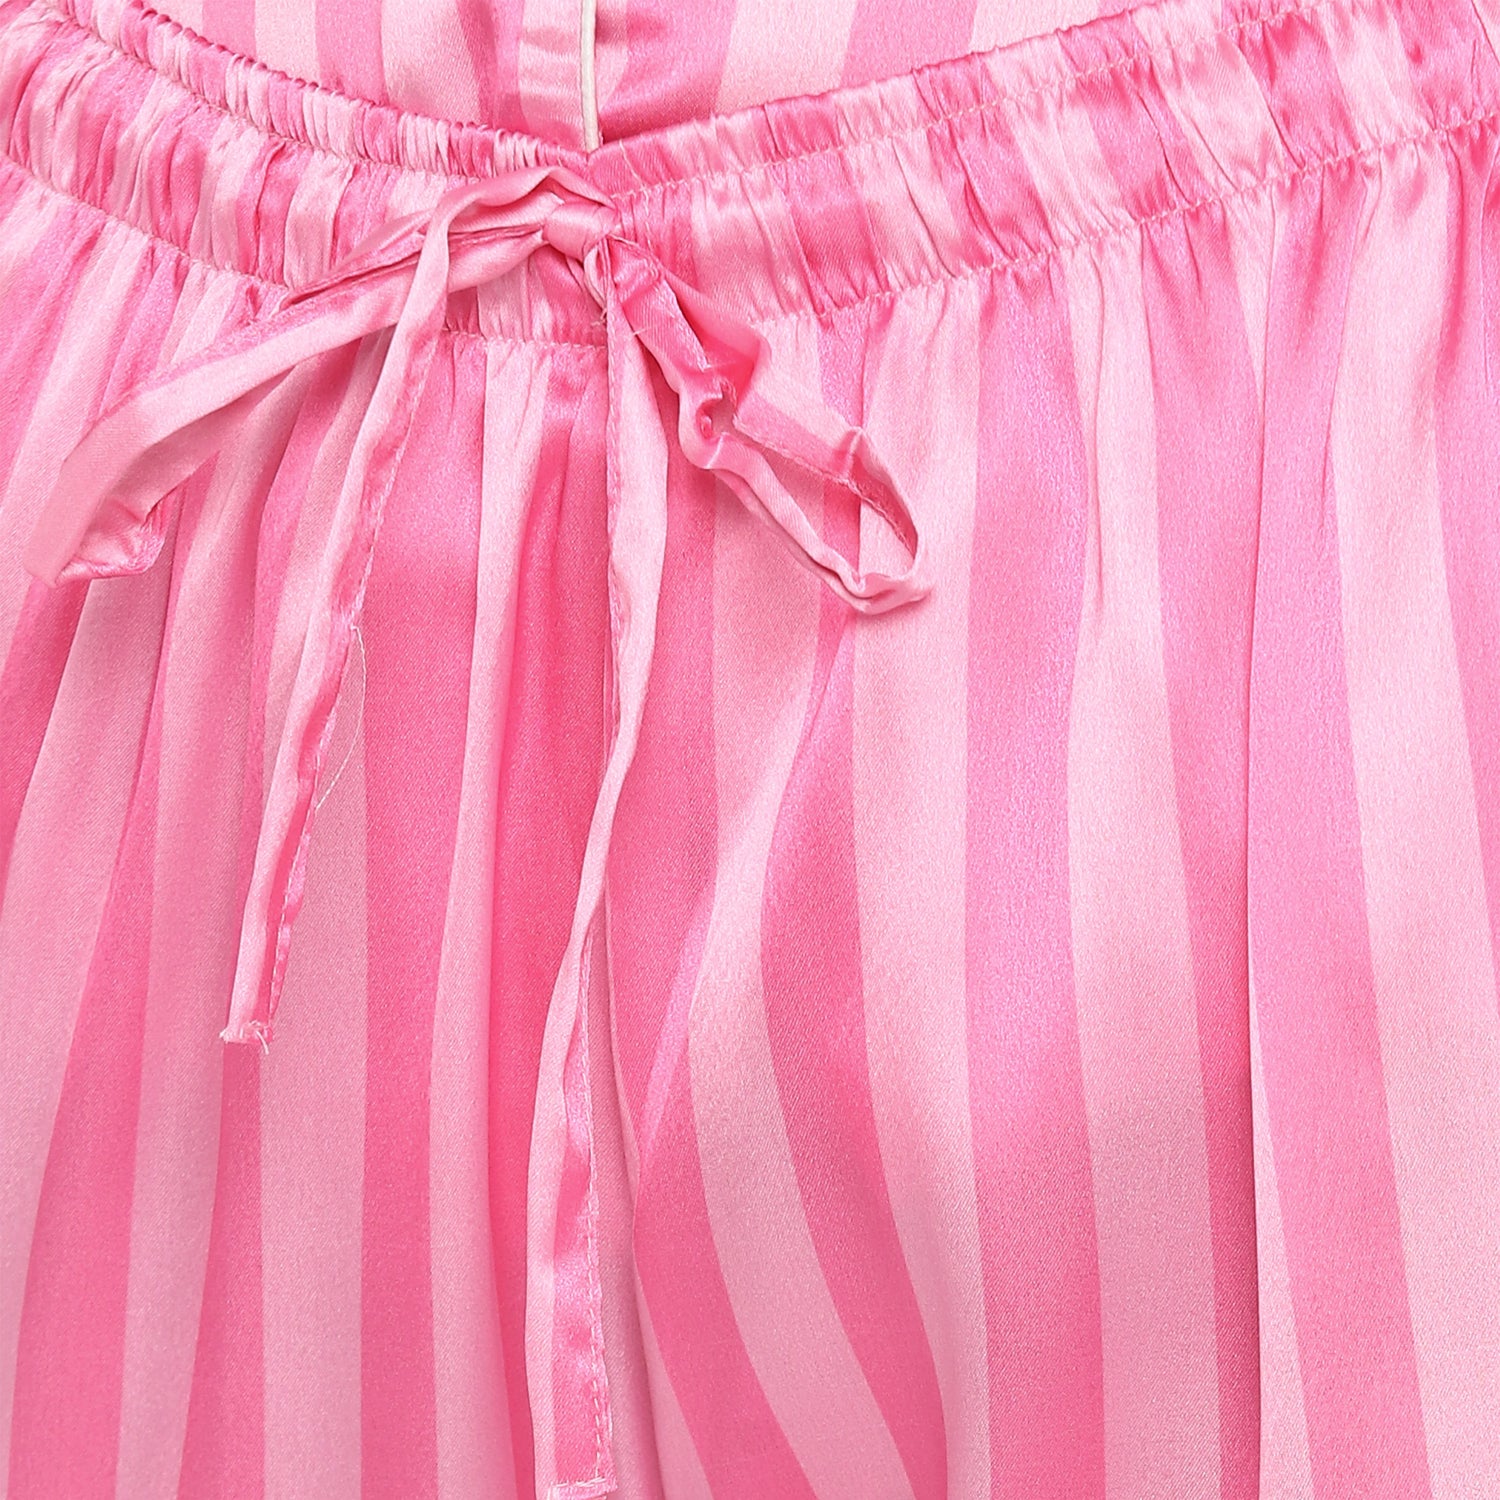 Pink Stripes Print  Long Sleeve Women's Night Suit - Shopbloom